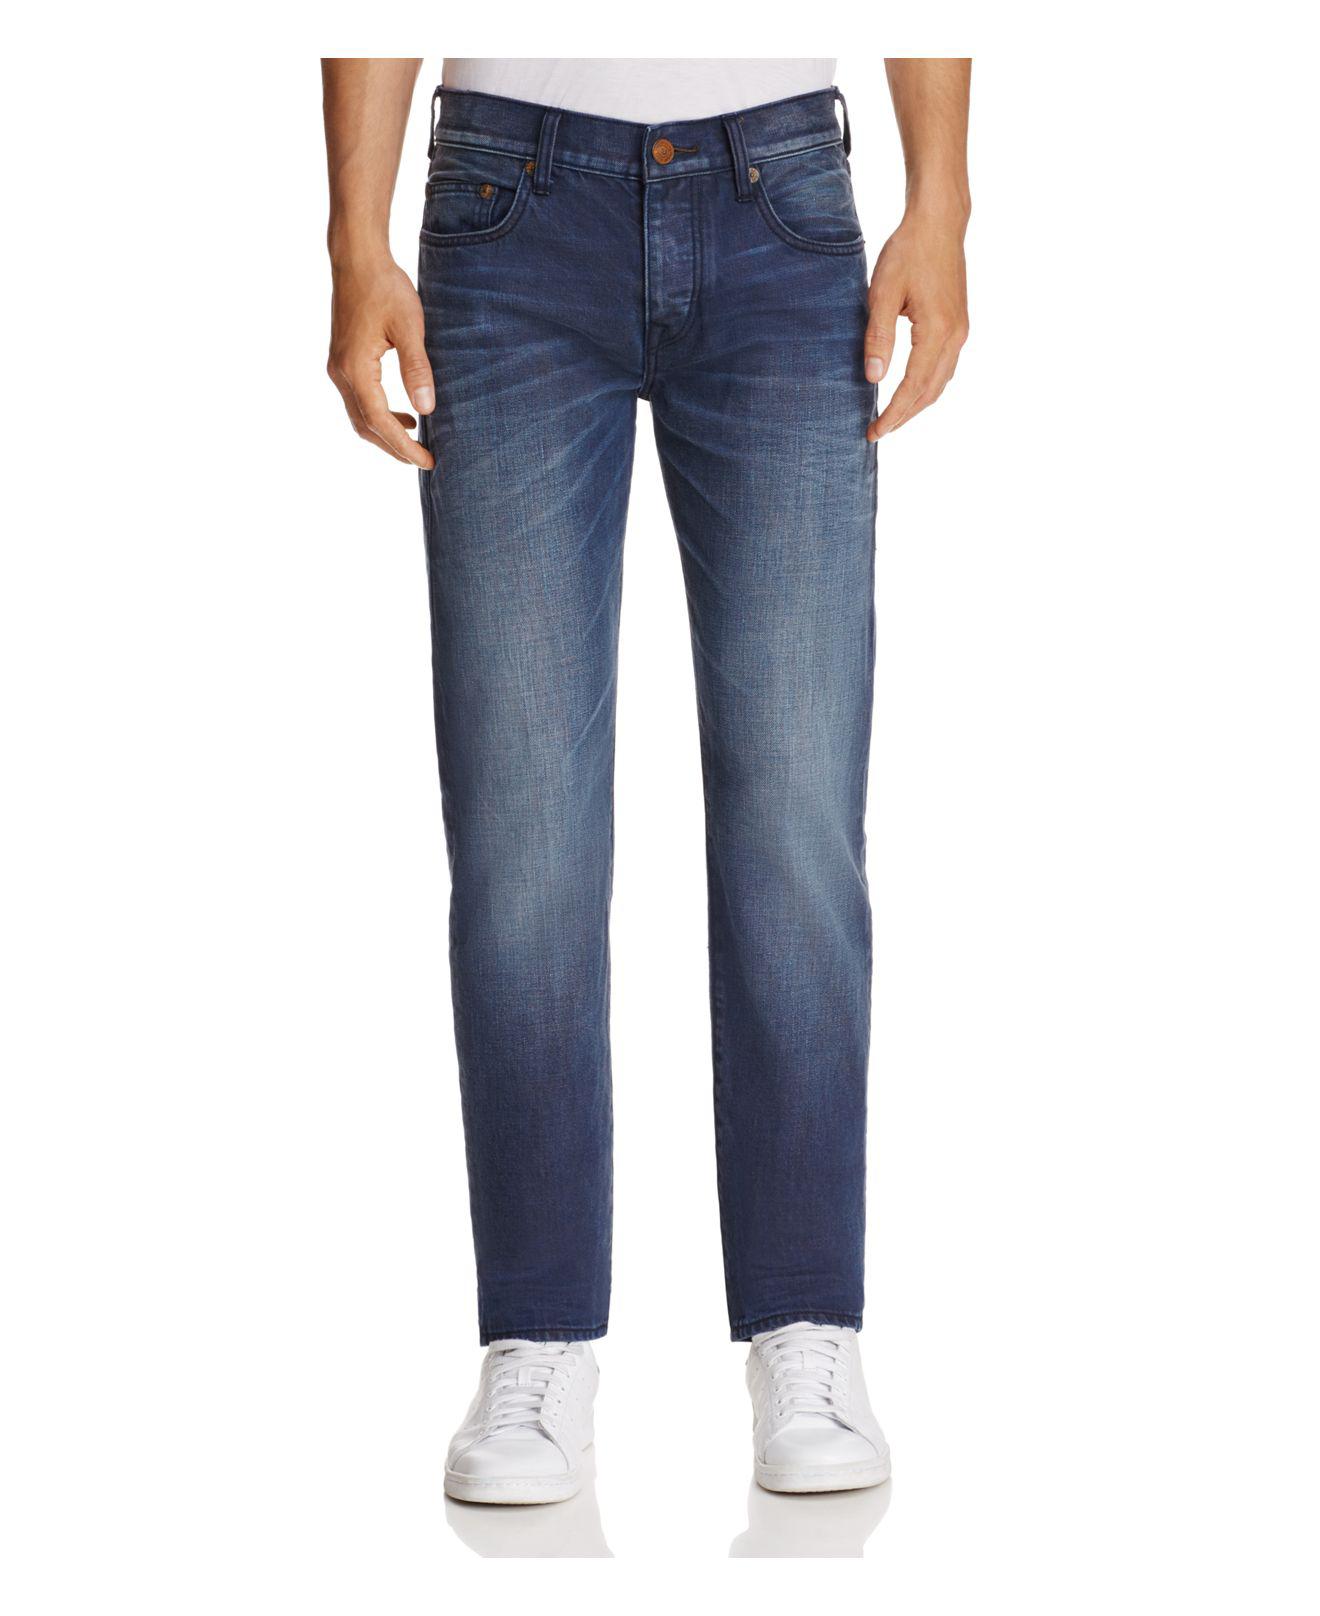 True Religion Rocco Blue Mariner Slim Fit Jeans In Dark Blue for Men - Lyst